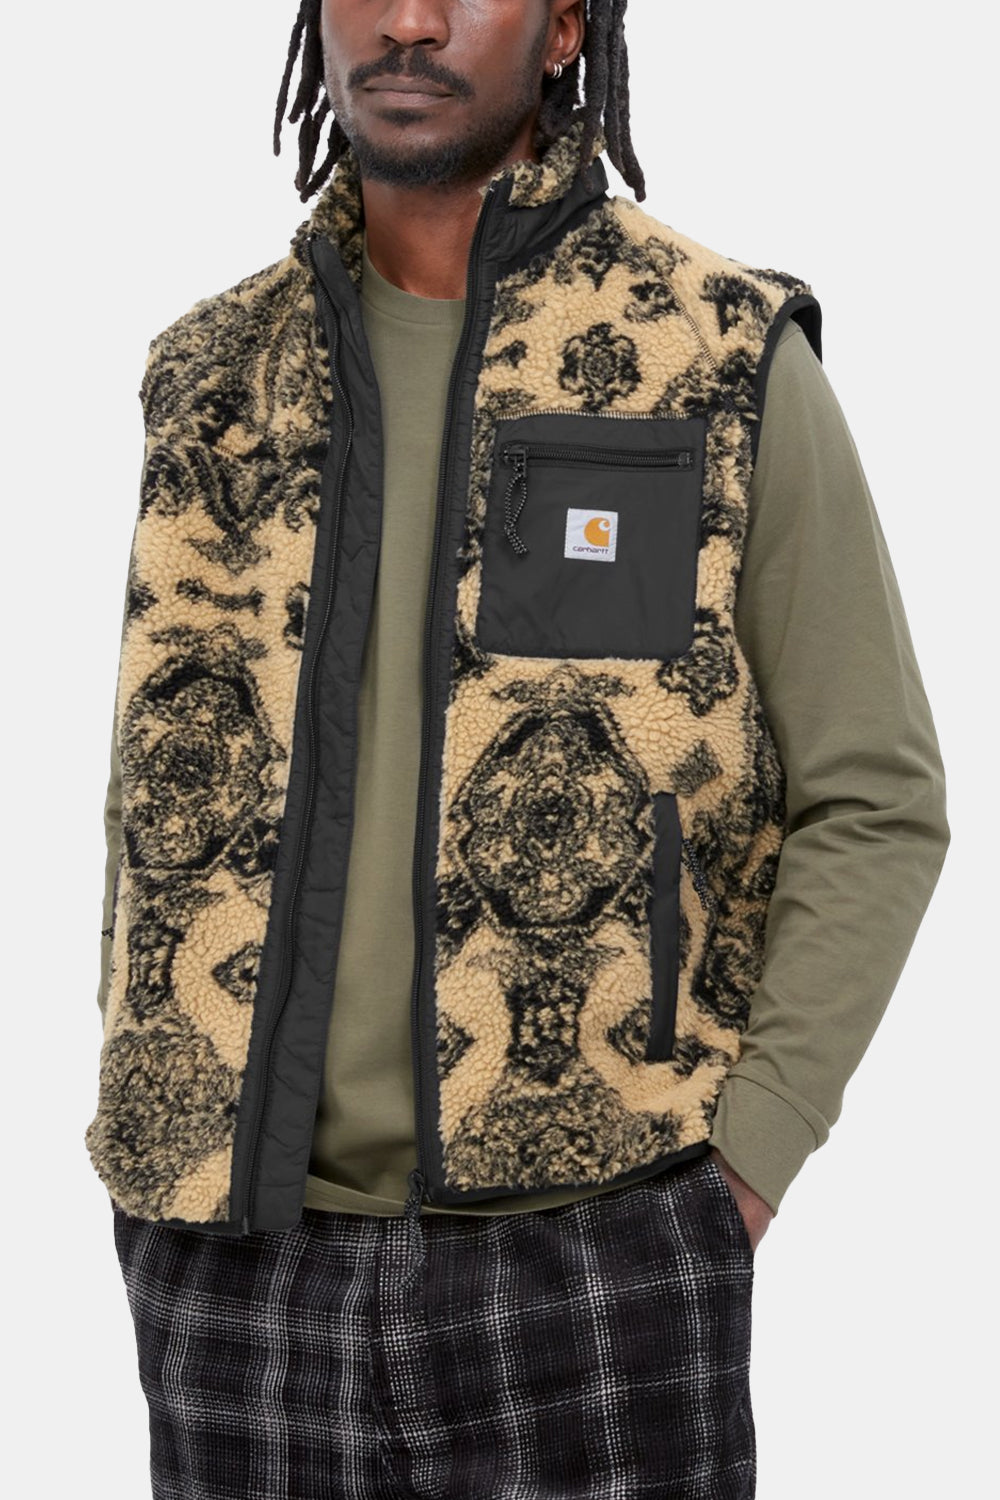 Carhartt WIP Prentis Vest Liner Verse Jacquard Fleece (Dusty Brown &amp; Scoot Black)